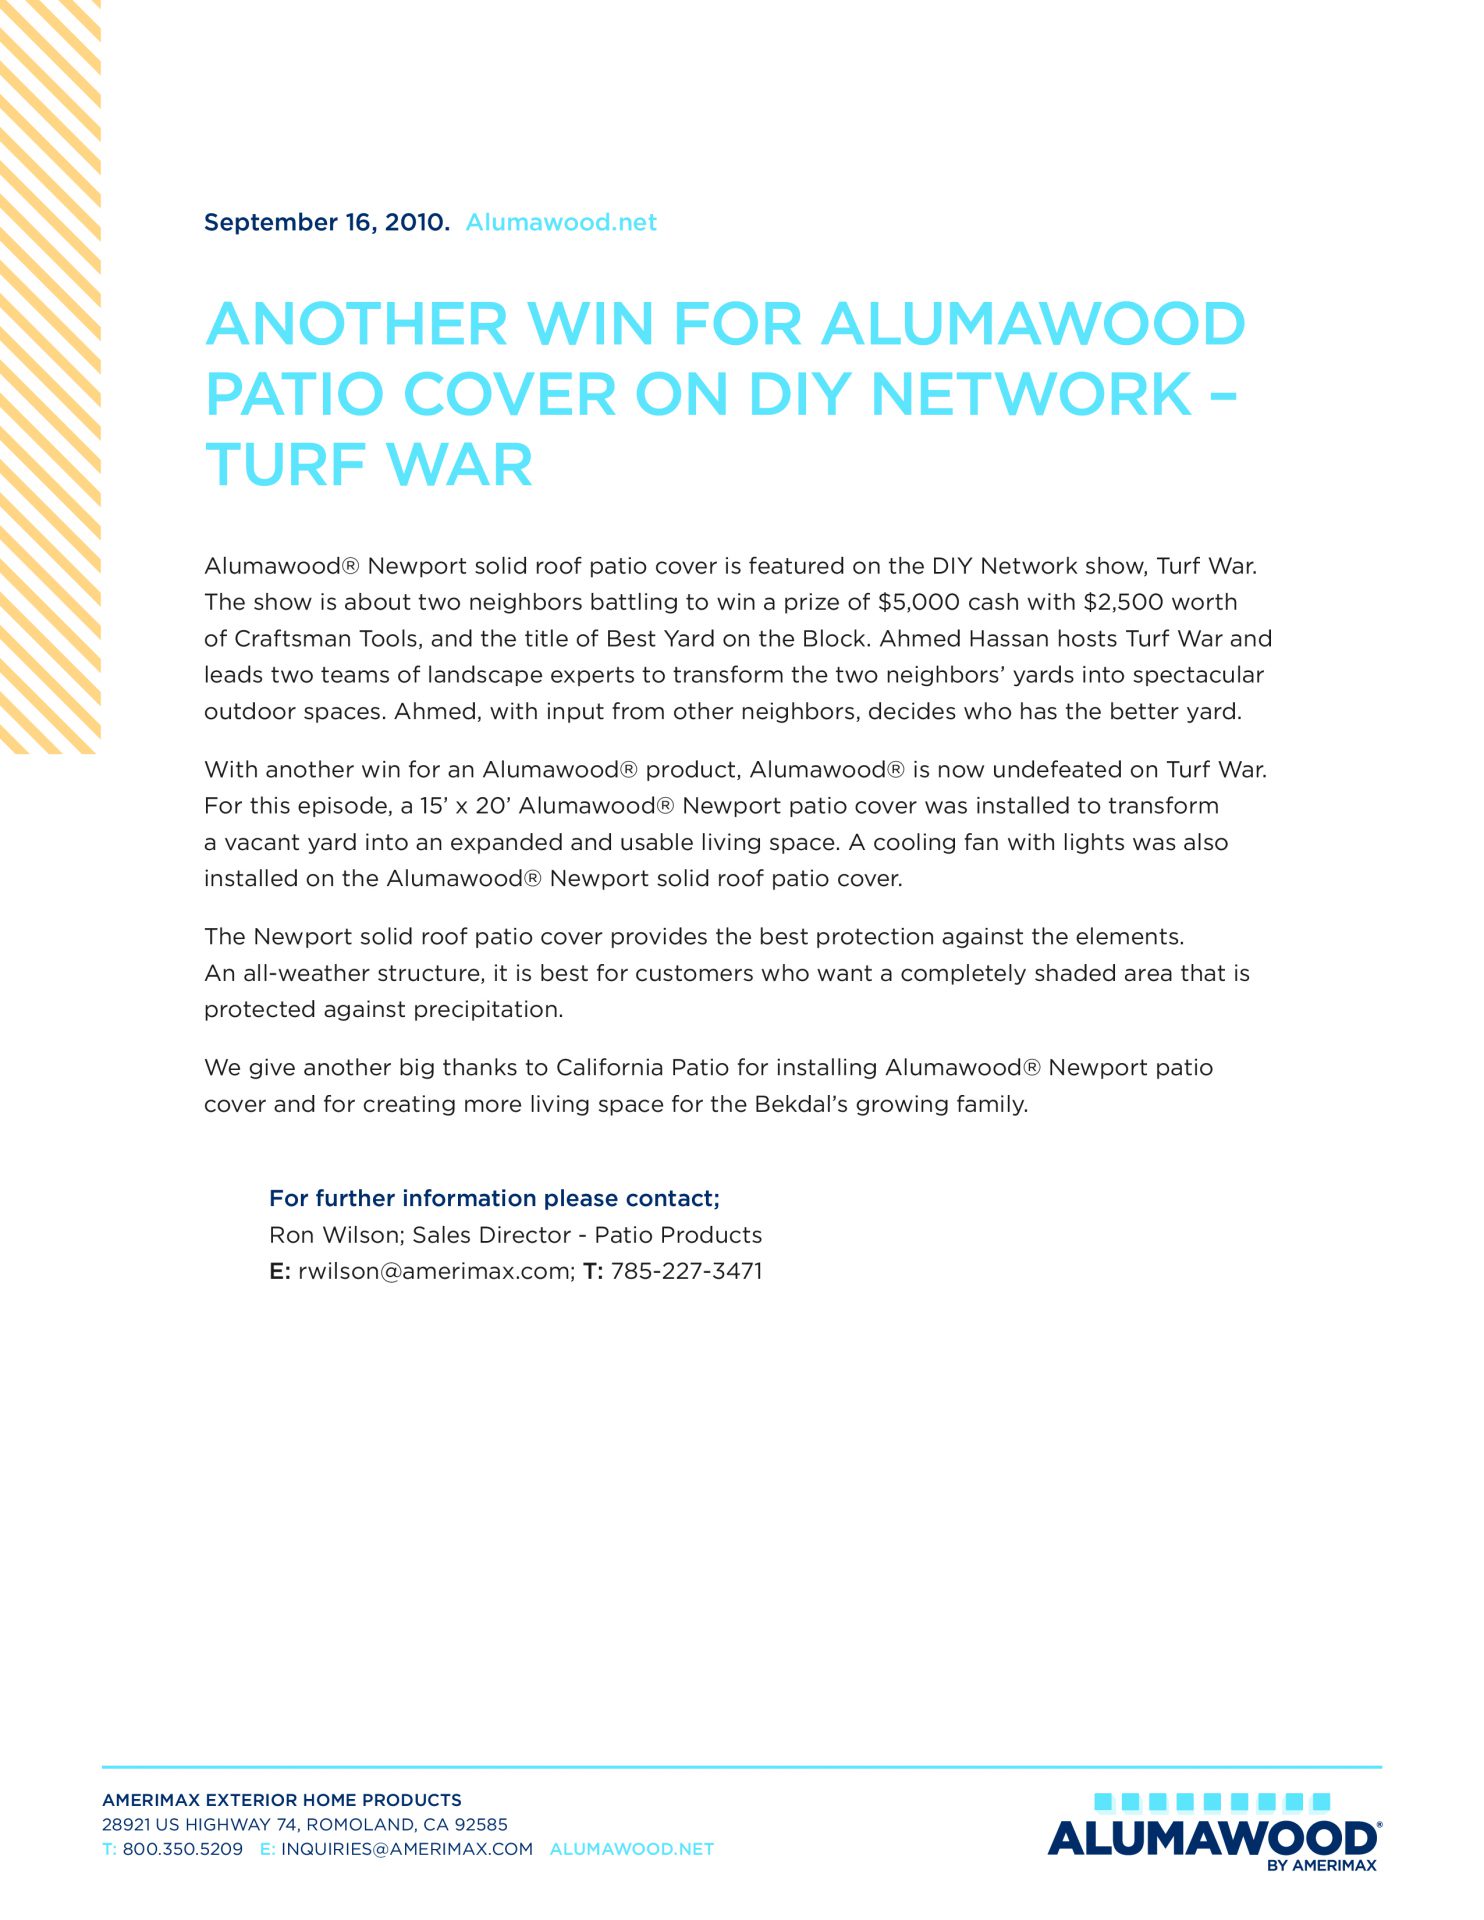 Alumawood news press release